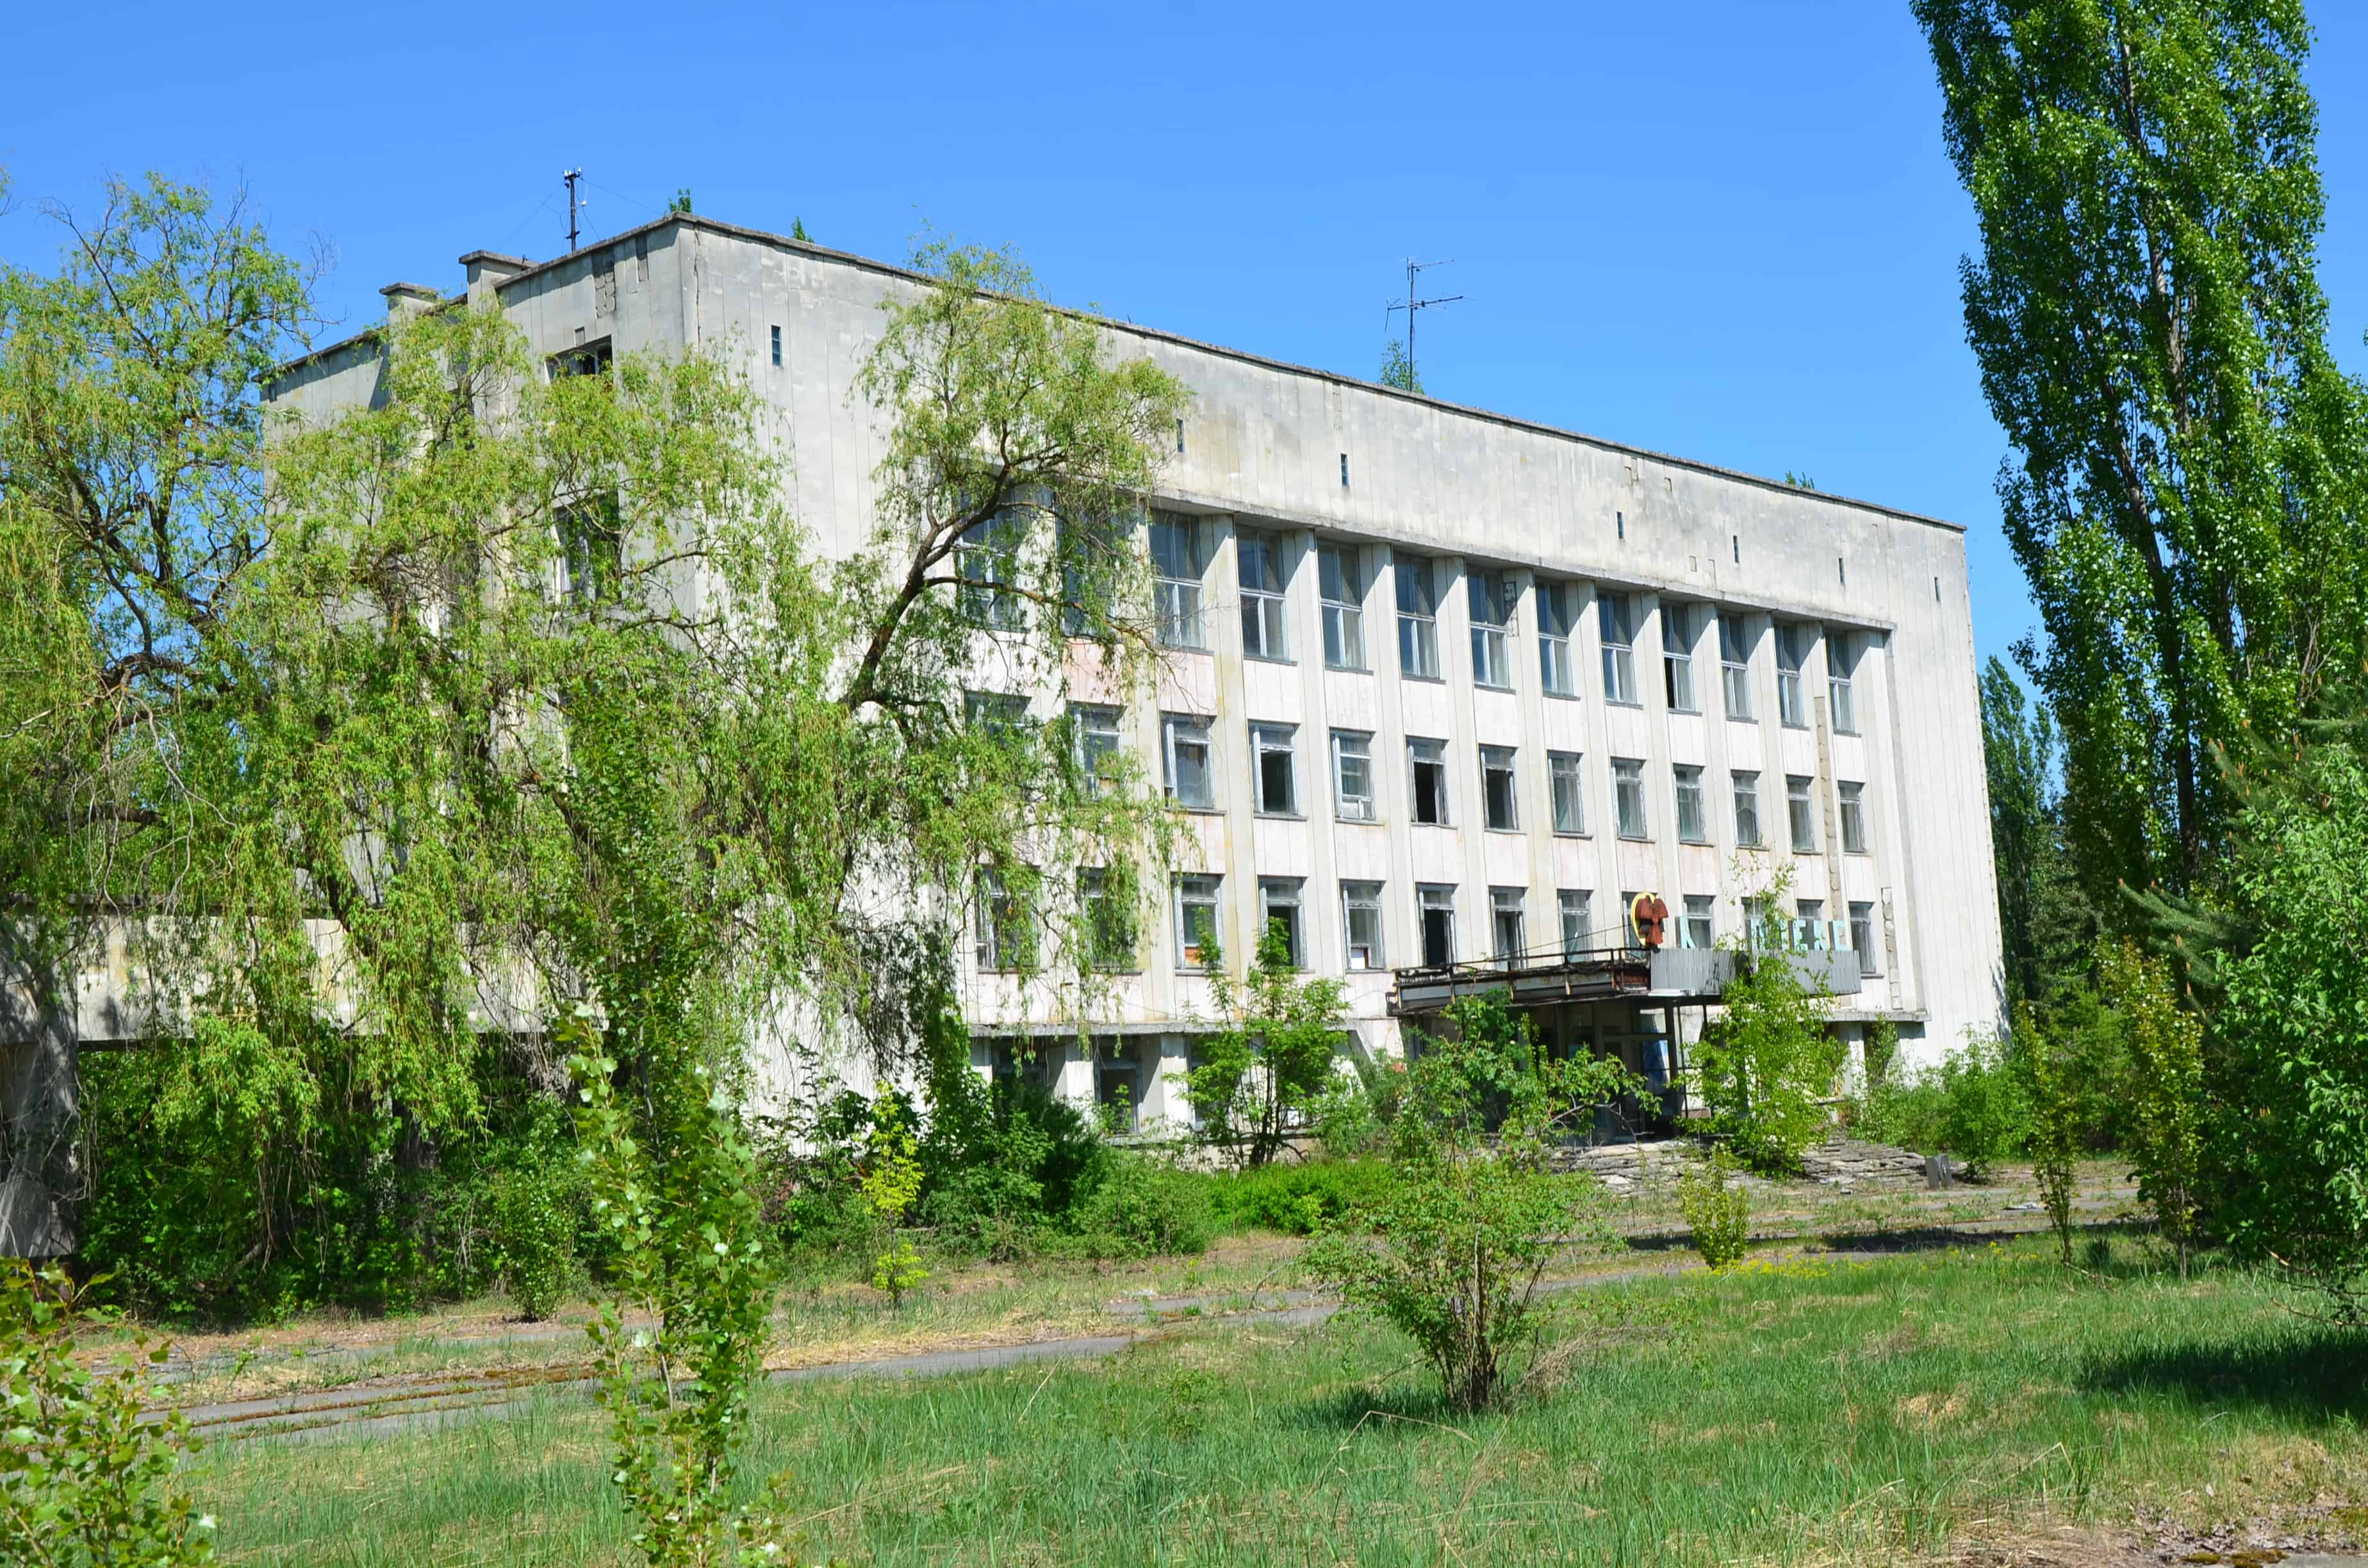 City administration building in Pripyat, Chernobyl Exclusion Zone, Ukraine